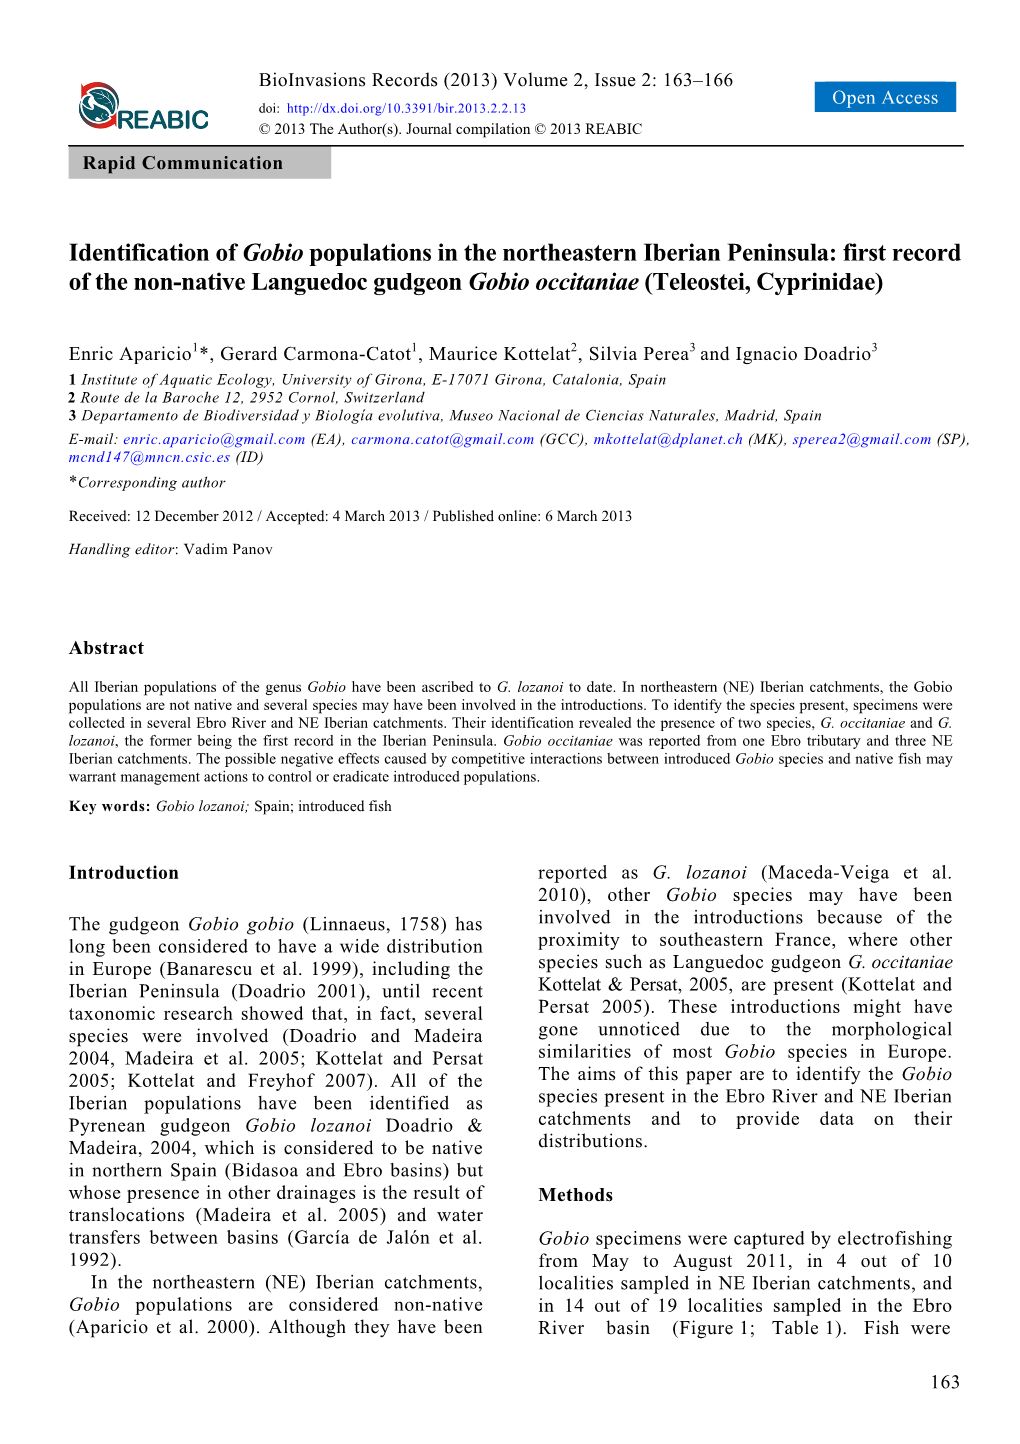 Identification of Gobio Populations in the Northeastern Iberian Peninsula: First Record of the Non-Native Languedoc Gudgeon Gobio Occitaniae (Teleostei, Cyprinidae)